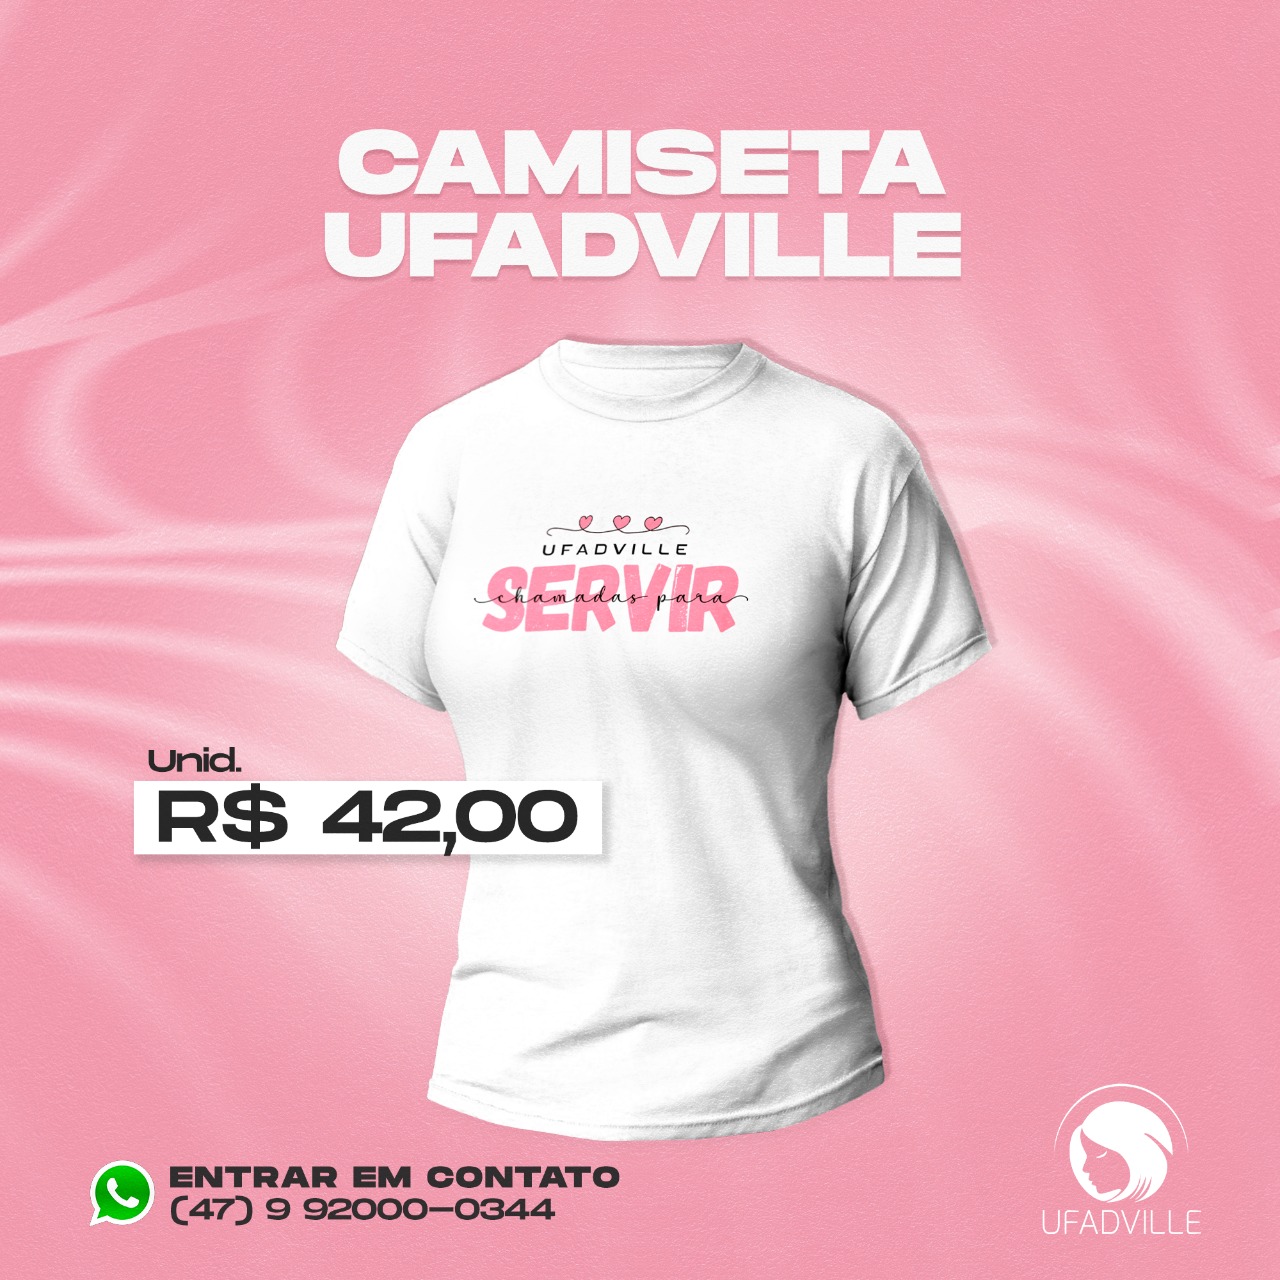 Camiseta UFADVILLE – Chamadas para Servir